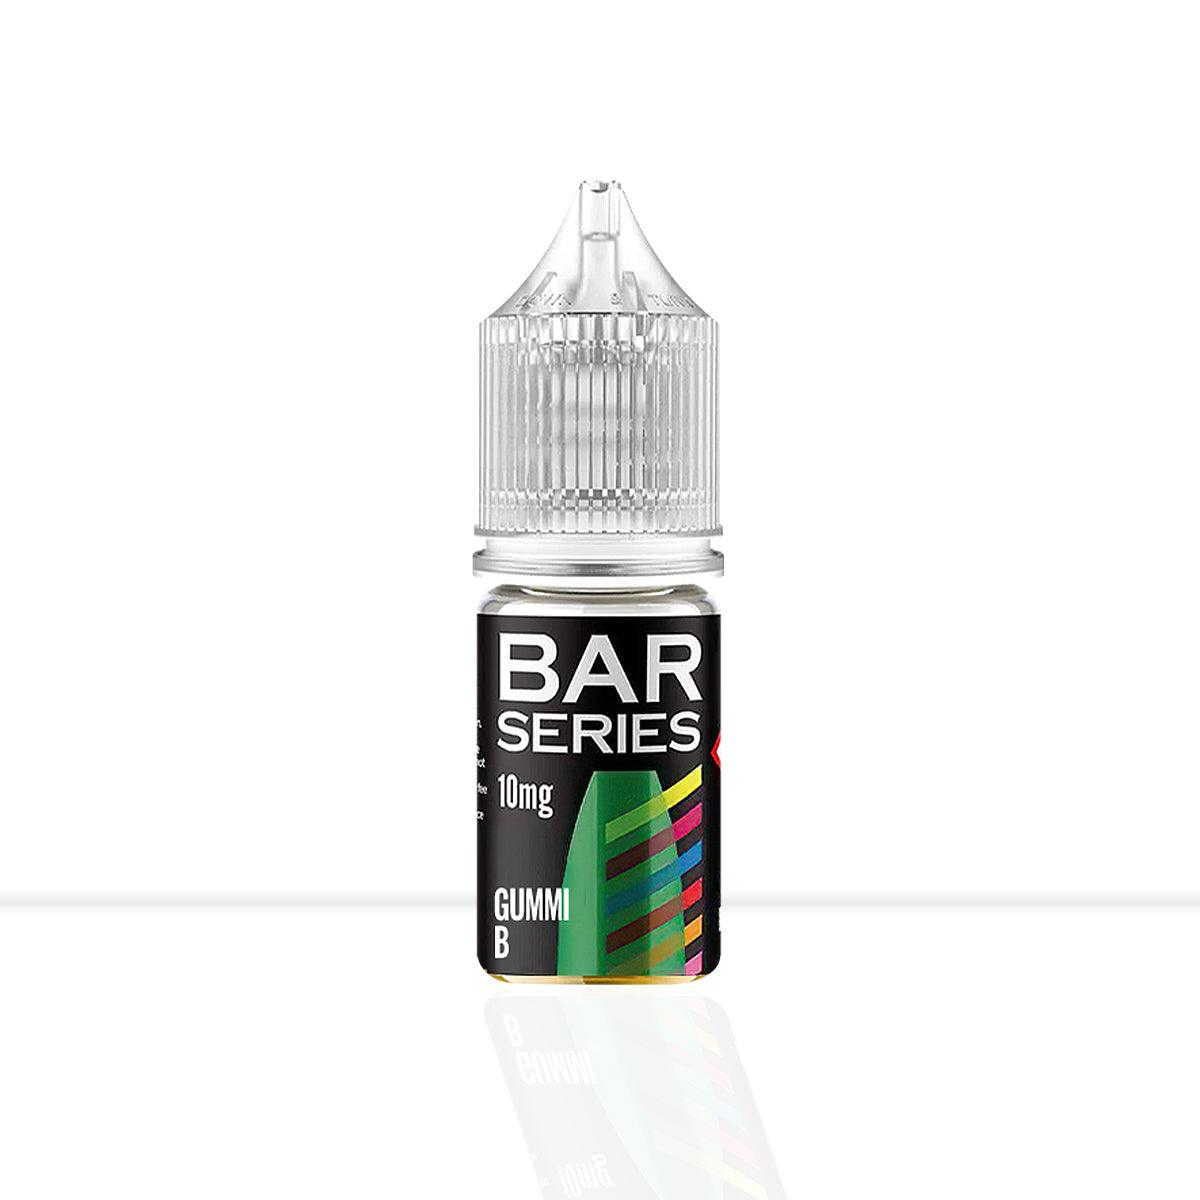 Gummy B Nic Salt E-Liquid Bar Series - E Liquid